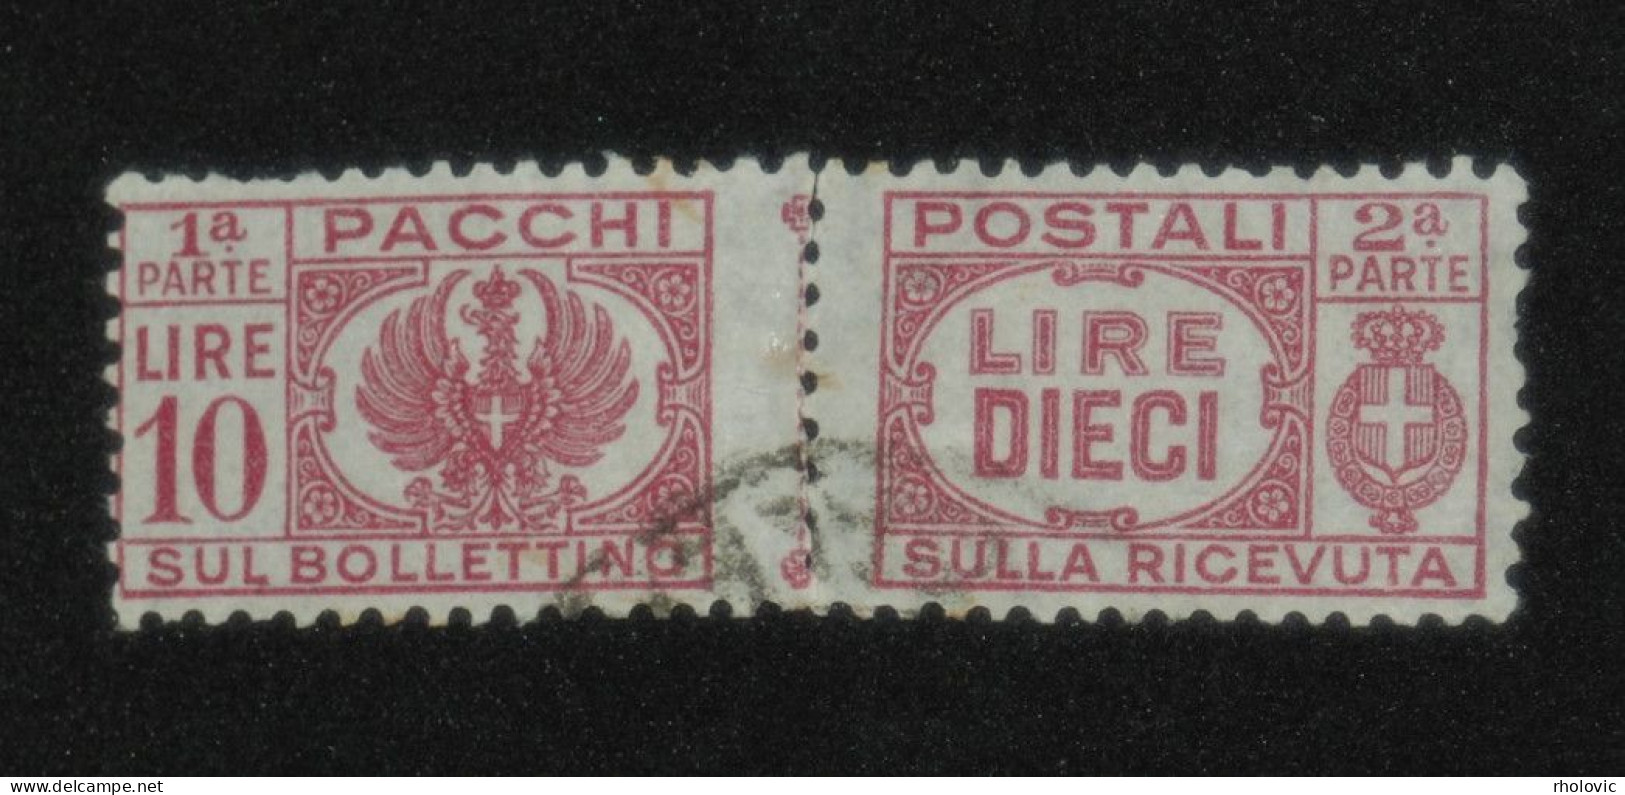 ITALY 1946, Parcel, 10 Lire, Lilac, Mi #P64, Used, CV: €120 - Paketmarken